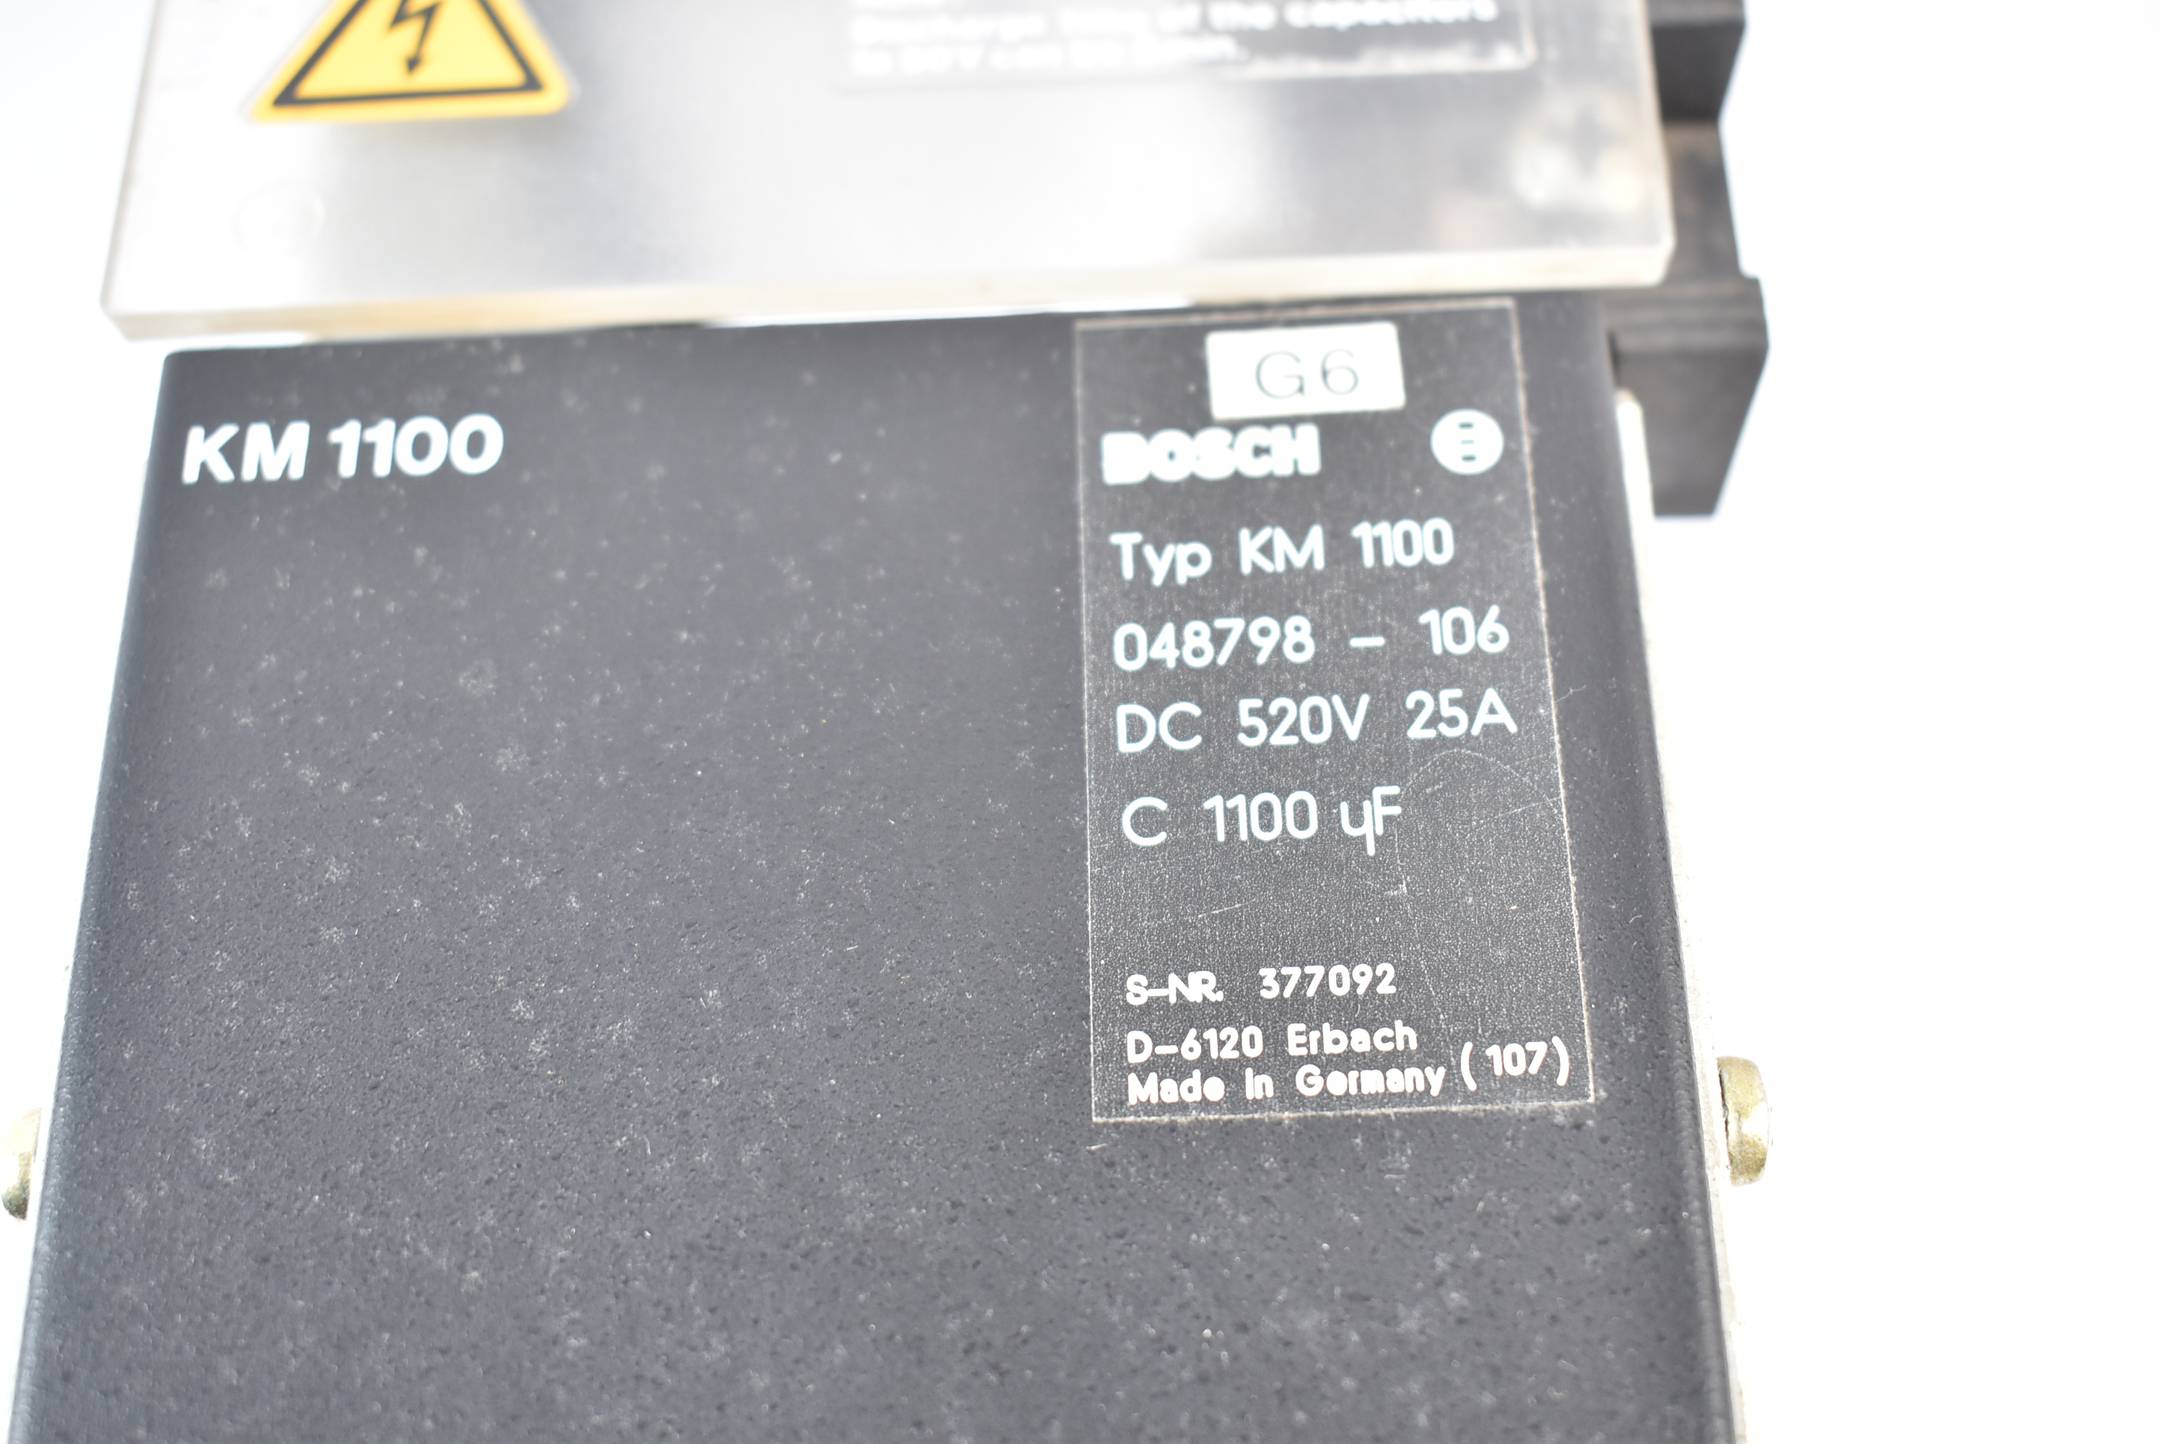 Bosch Kondensator Modul KM1100  ( 048798-106 )